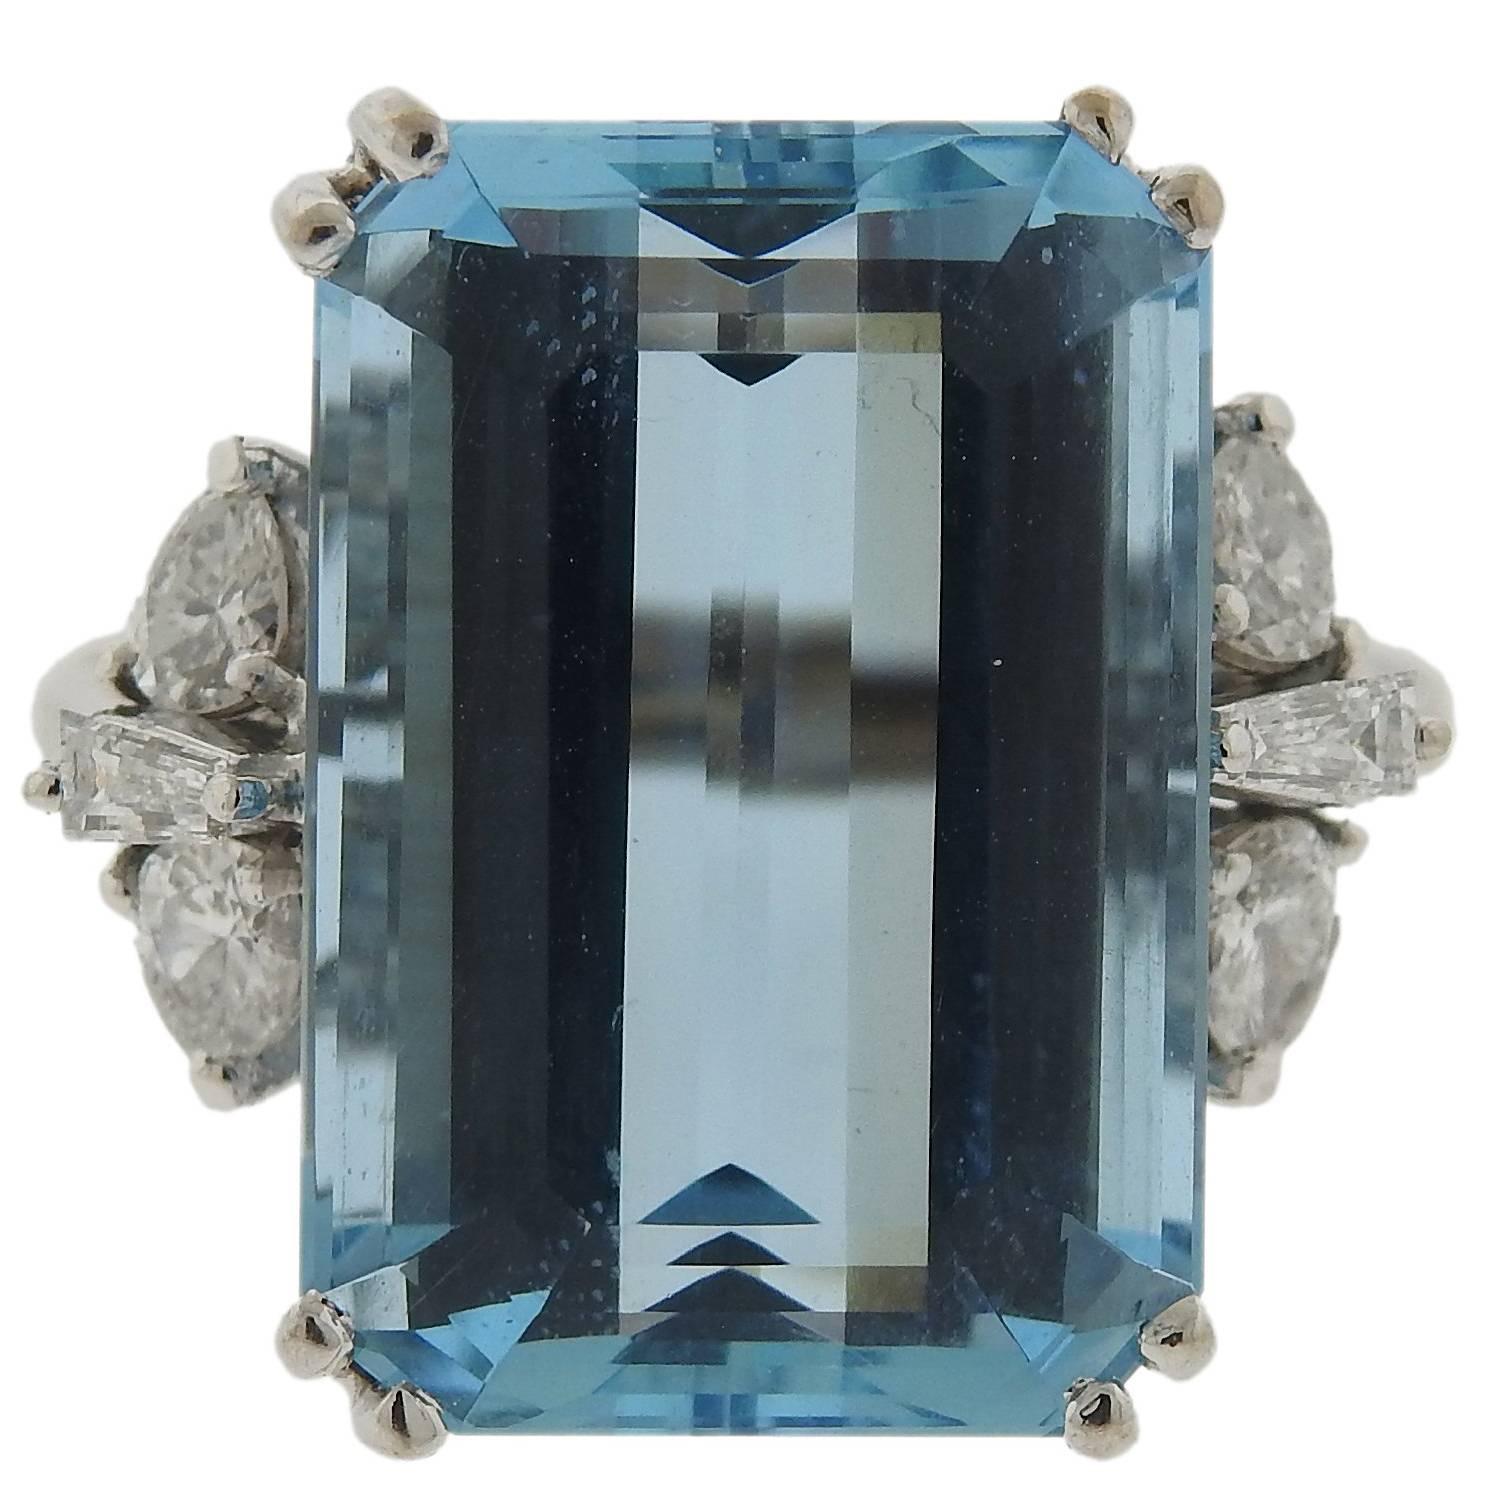 H Stern Aquamarine Diamond Gold Ring